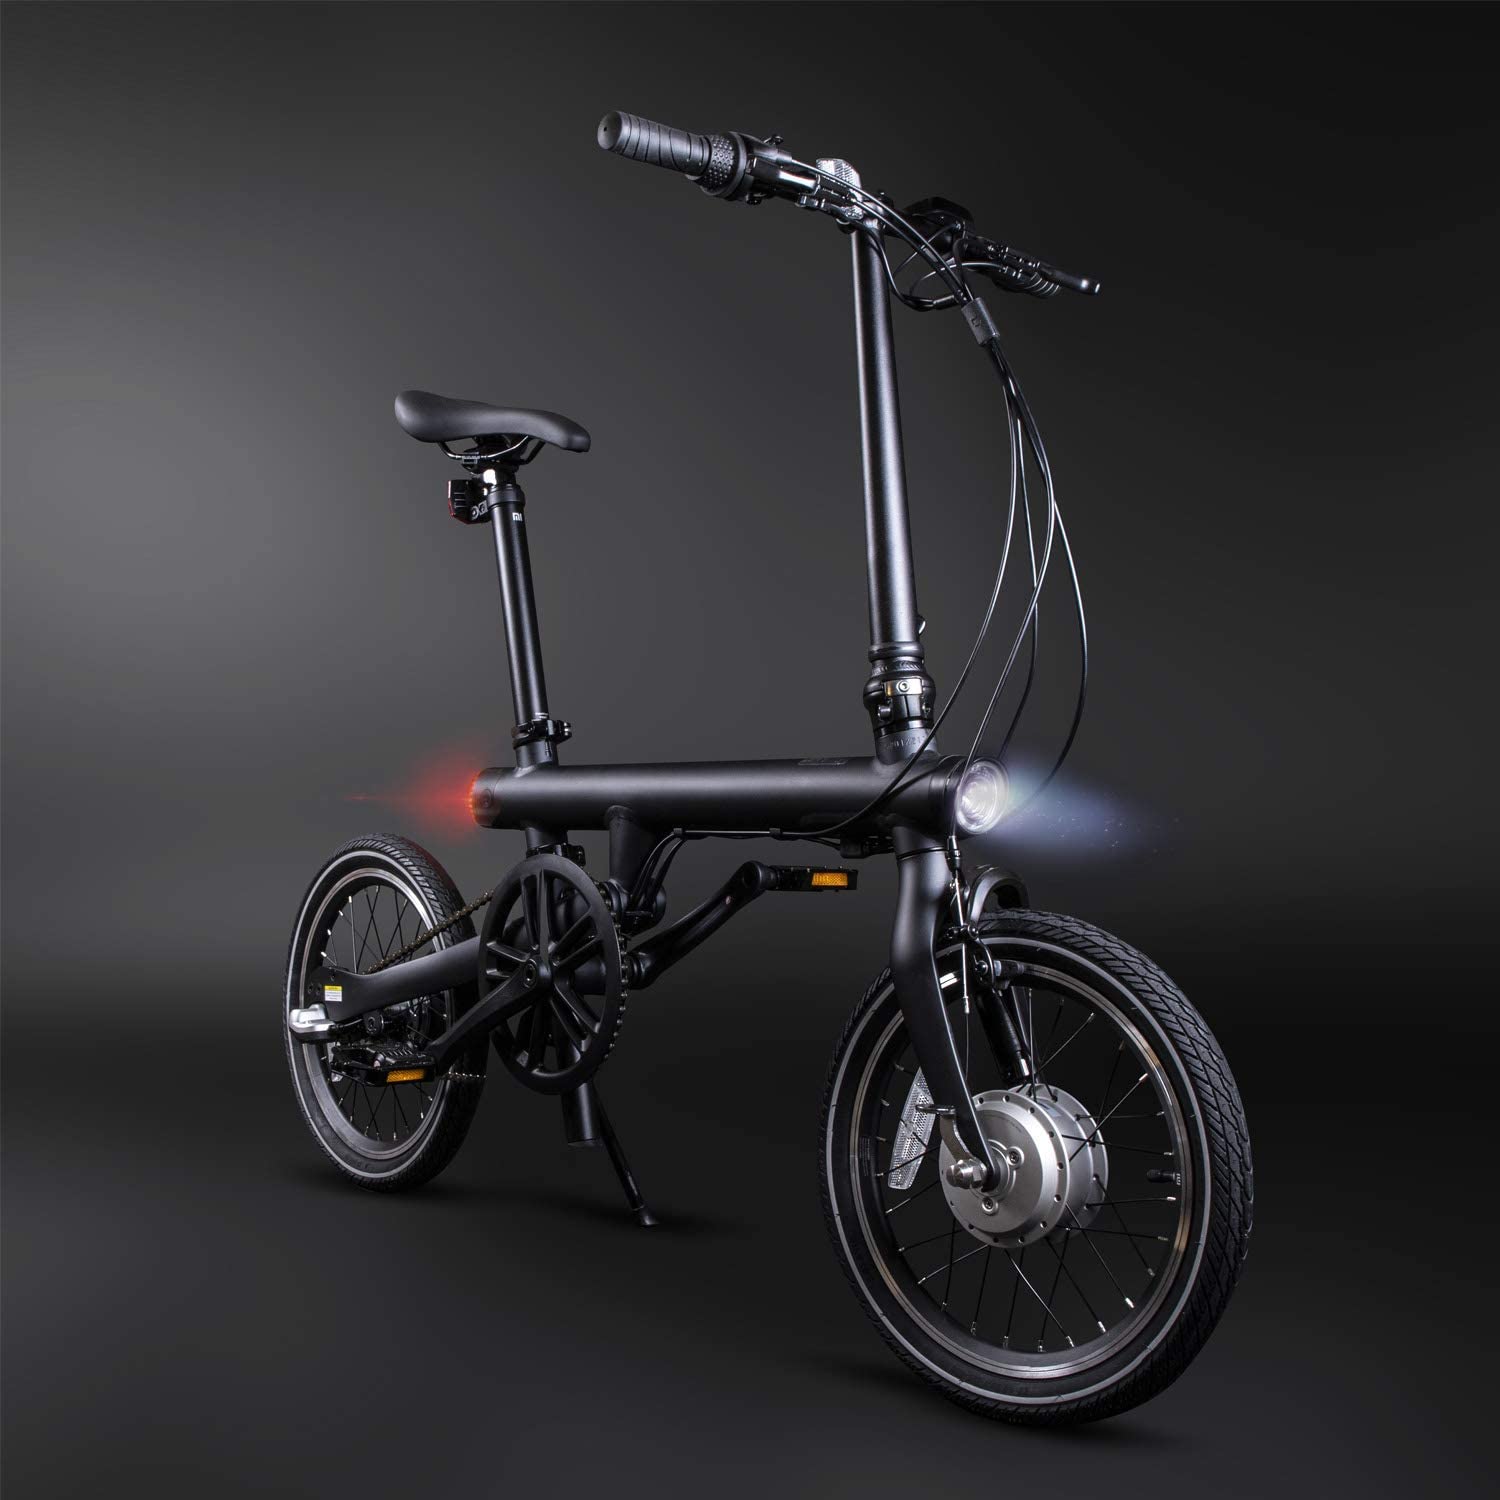 Bicicleta eléctrica  Xiaomi Qicycle, Hasta 25 km/h, Autonomía 45 km,  Plegable, Negra